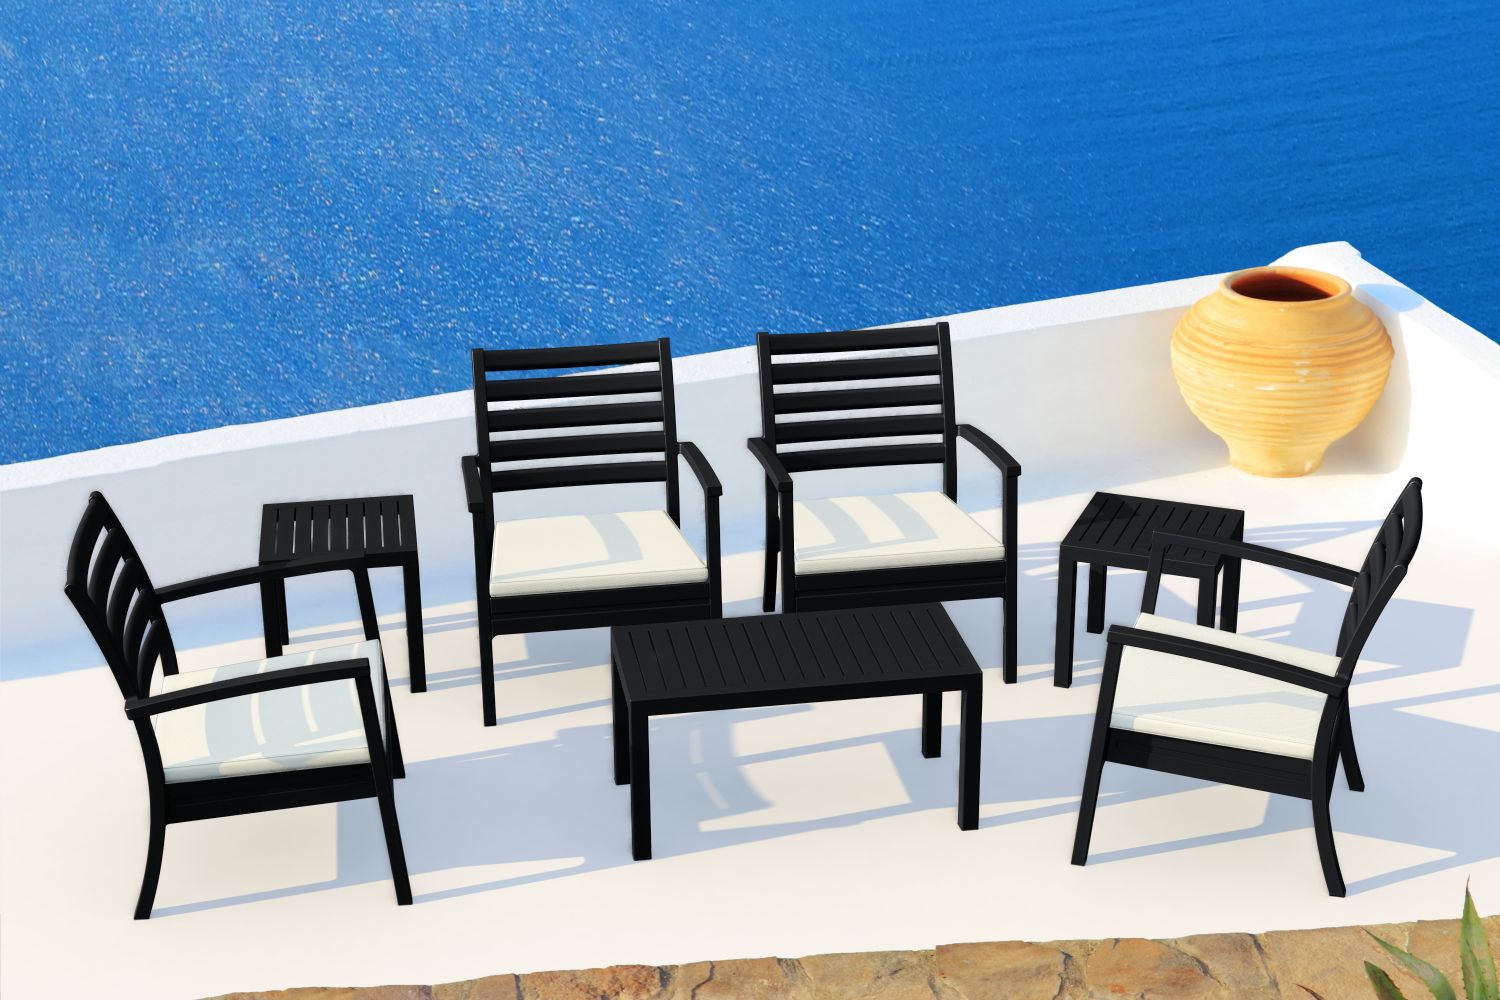 Artemis XL Outdoor Club Chair White - Black ISP004-WHI-CBL - 10